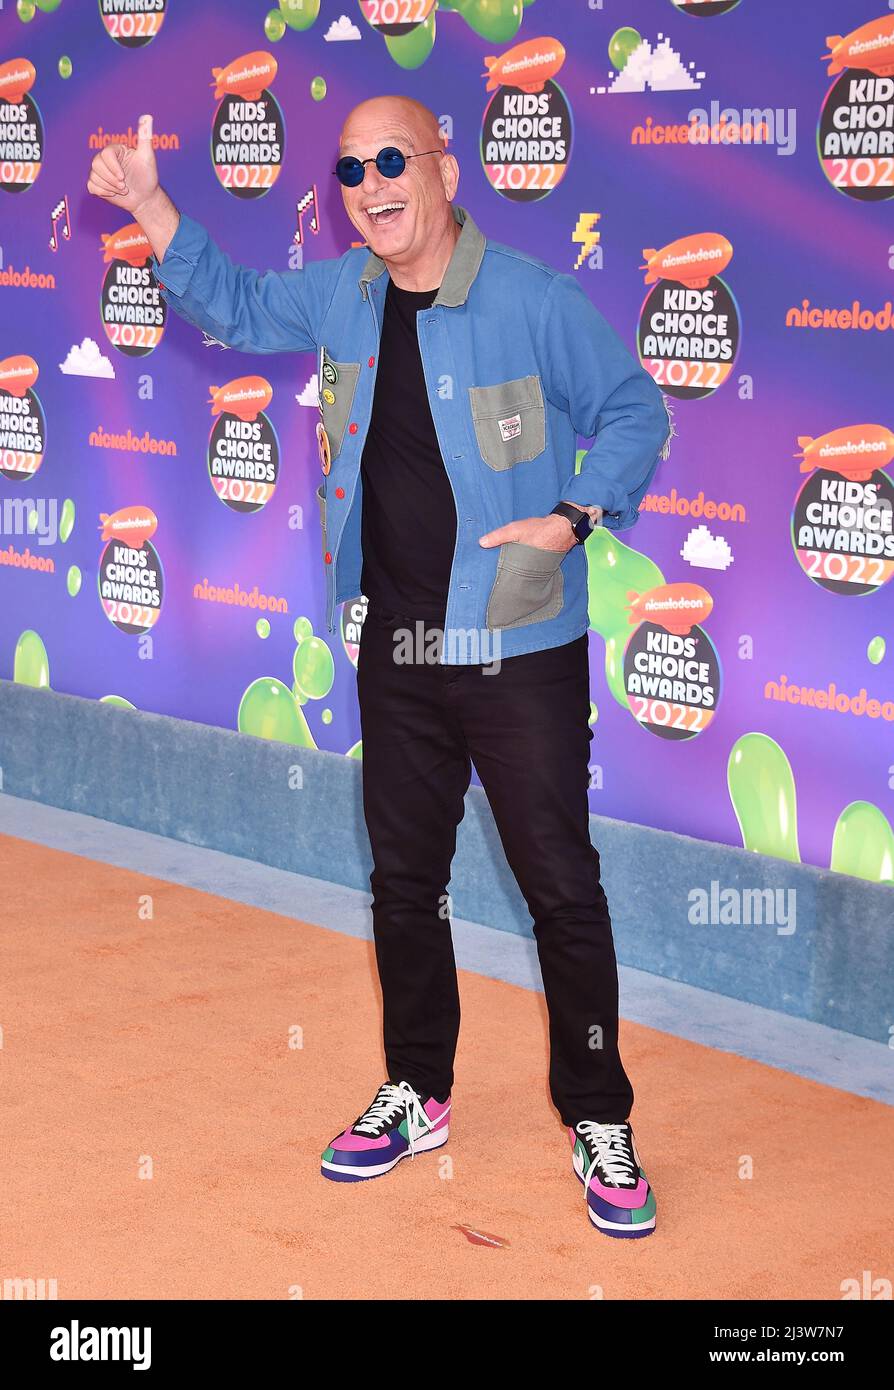 SANTA MONICA, CA - APRIL 09: Howie Mandel attends the 2022 Nickelodeon Kid's Choice Awards at Barker Hangar on April 09, 2022 in Santa Monica, Califor Stock Photo